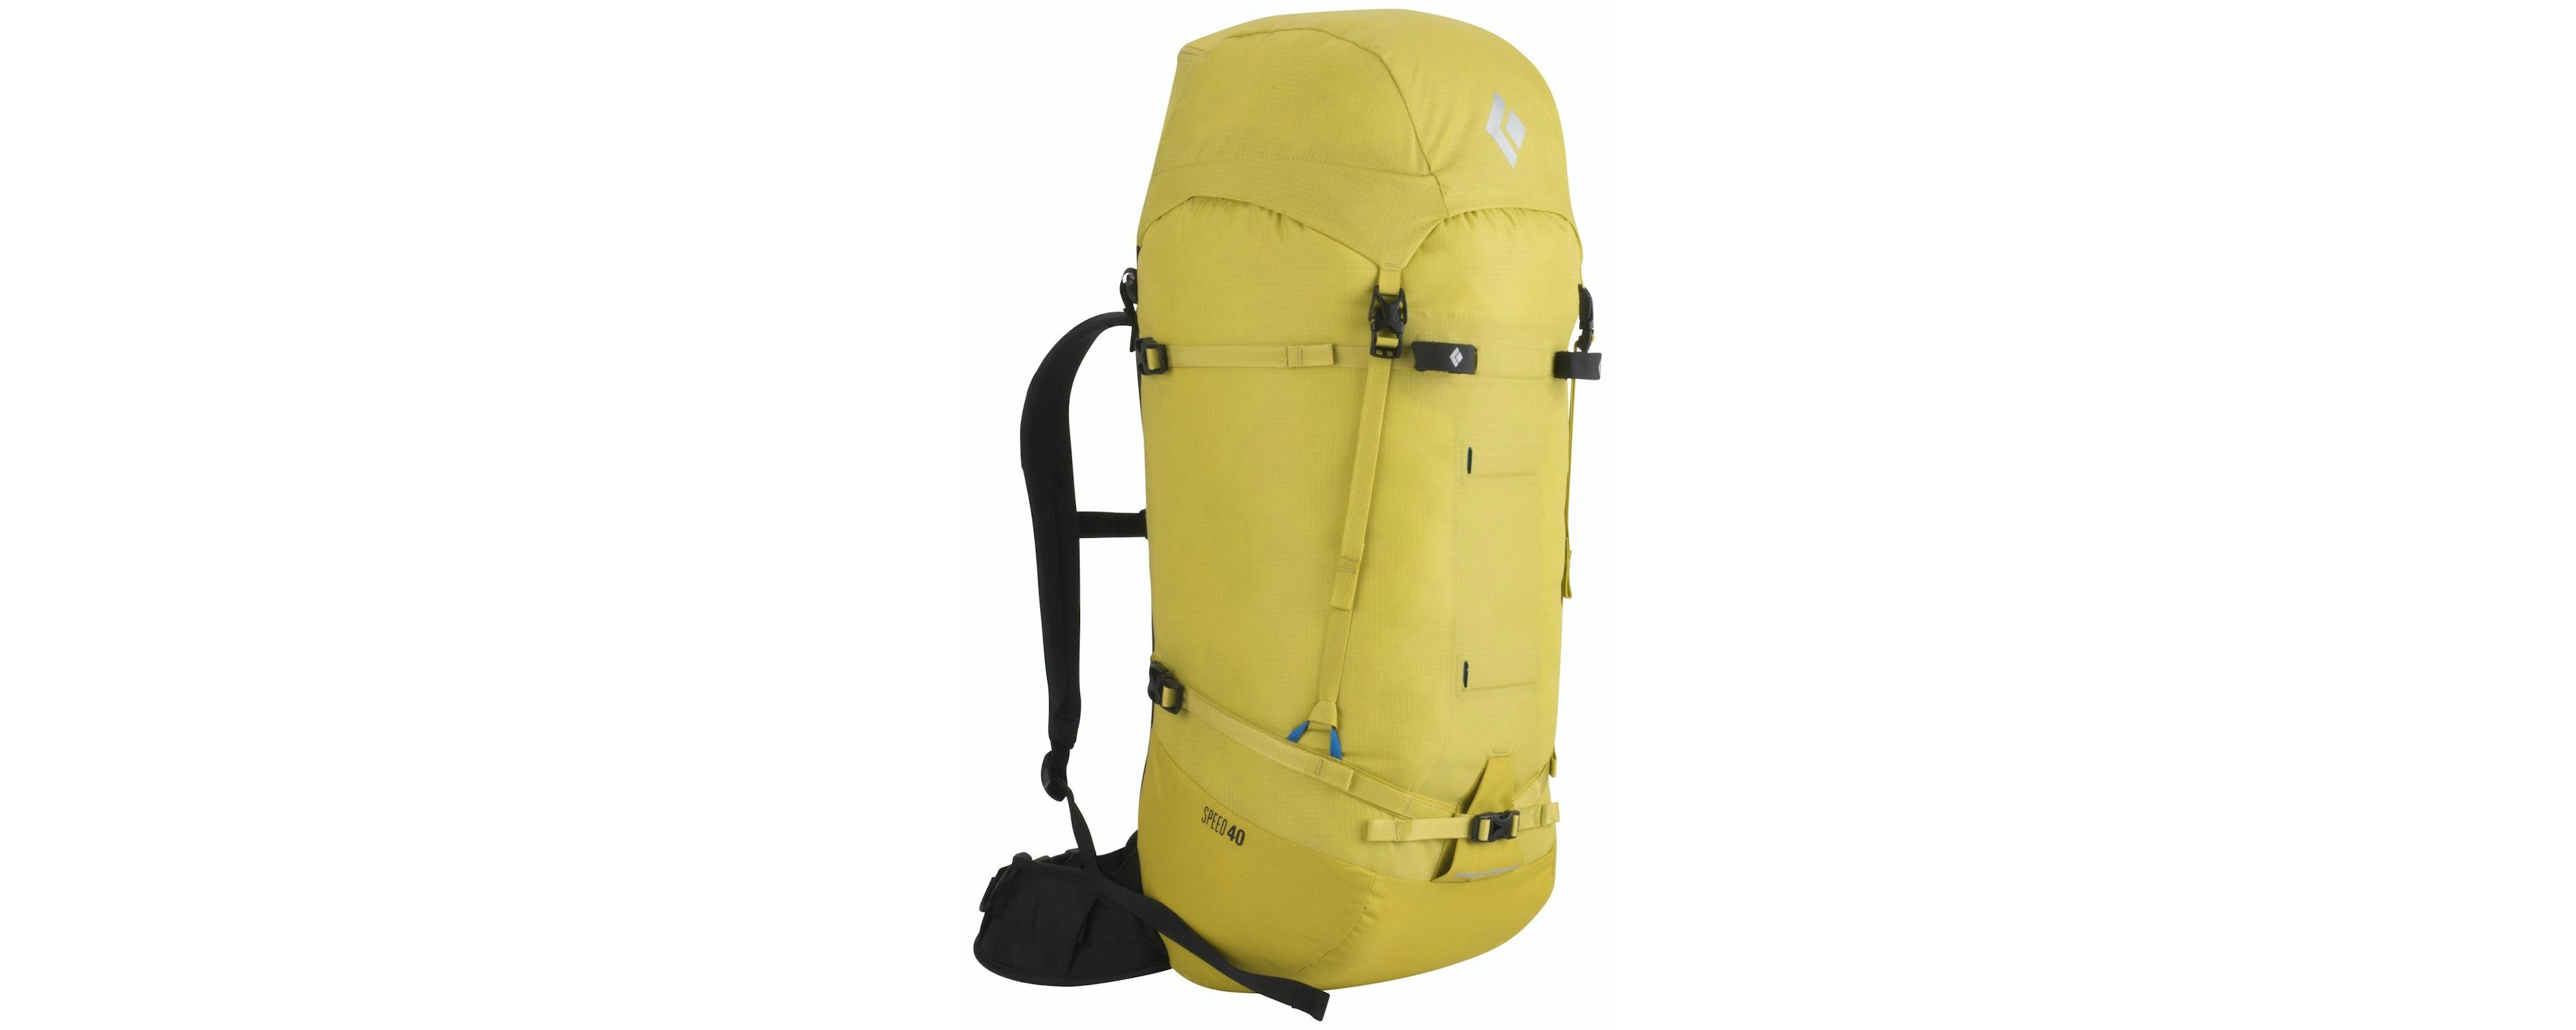 Pail yellow climbing backpack